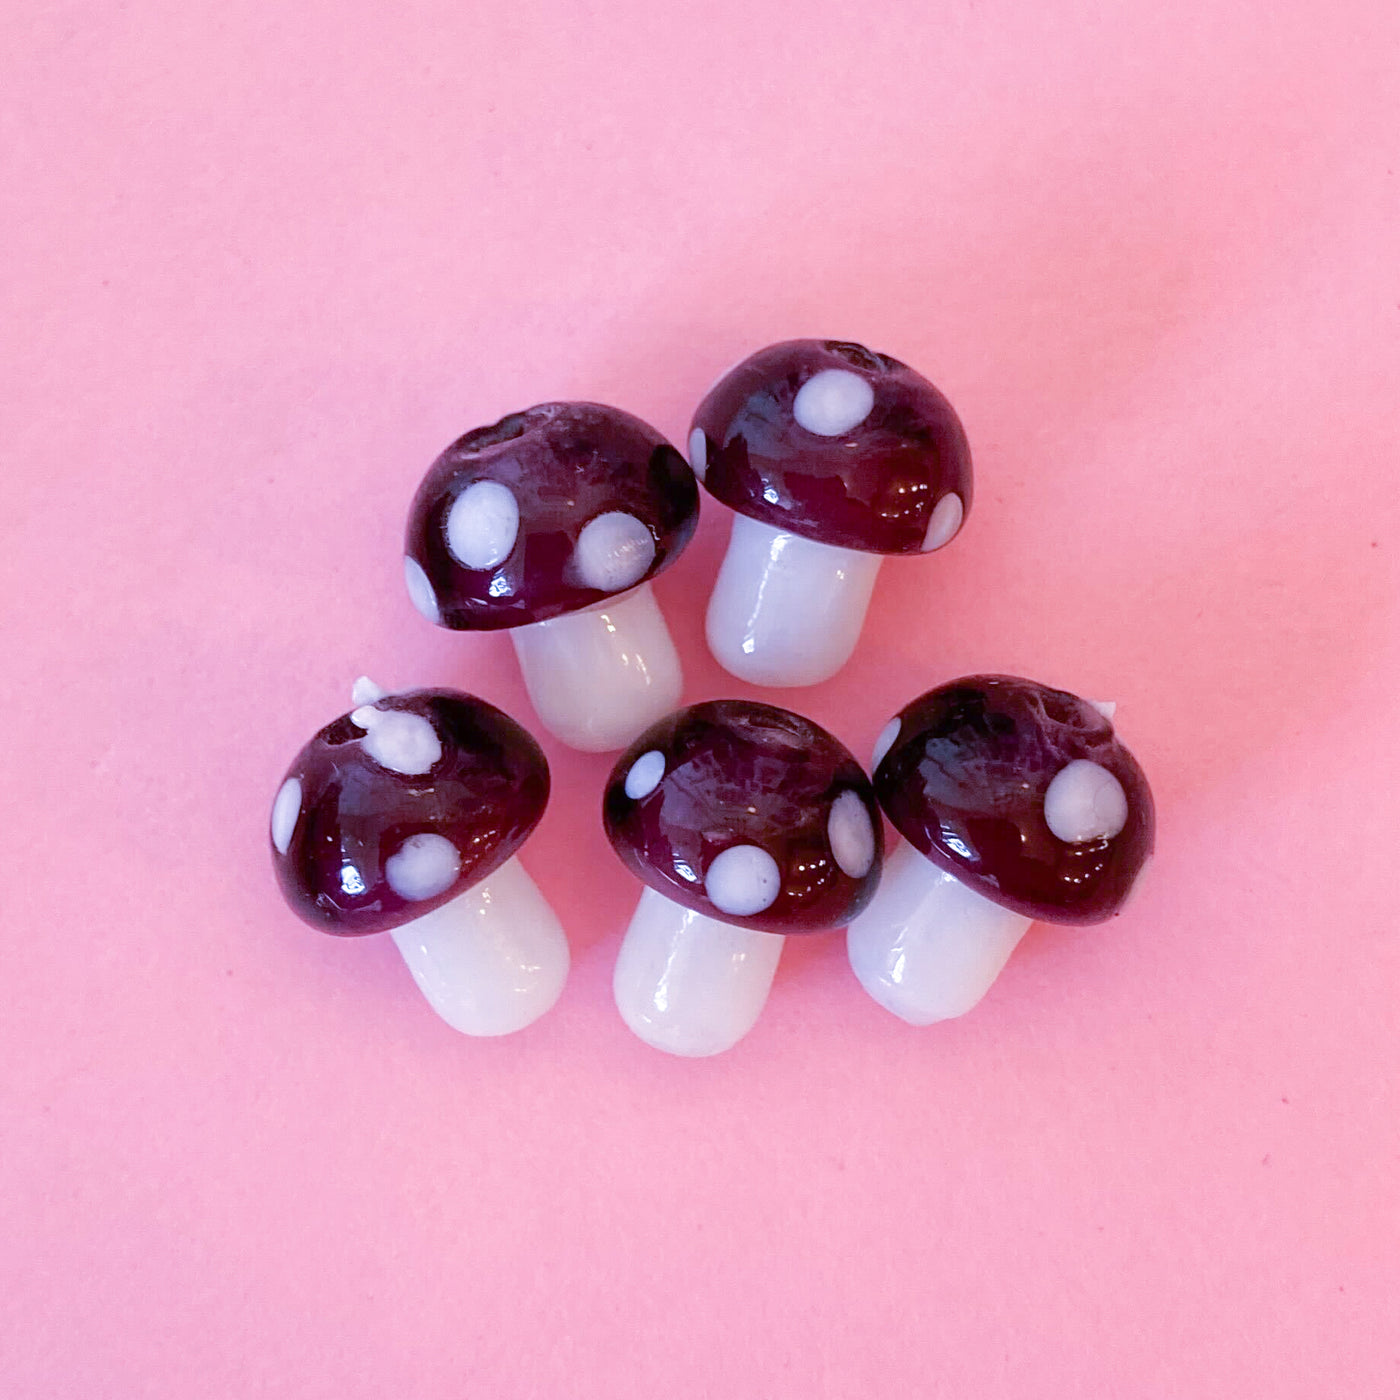 Glass mushroom beads in purple